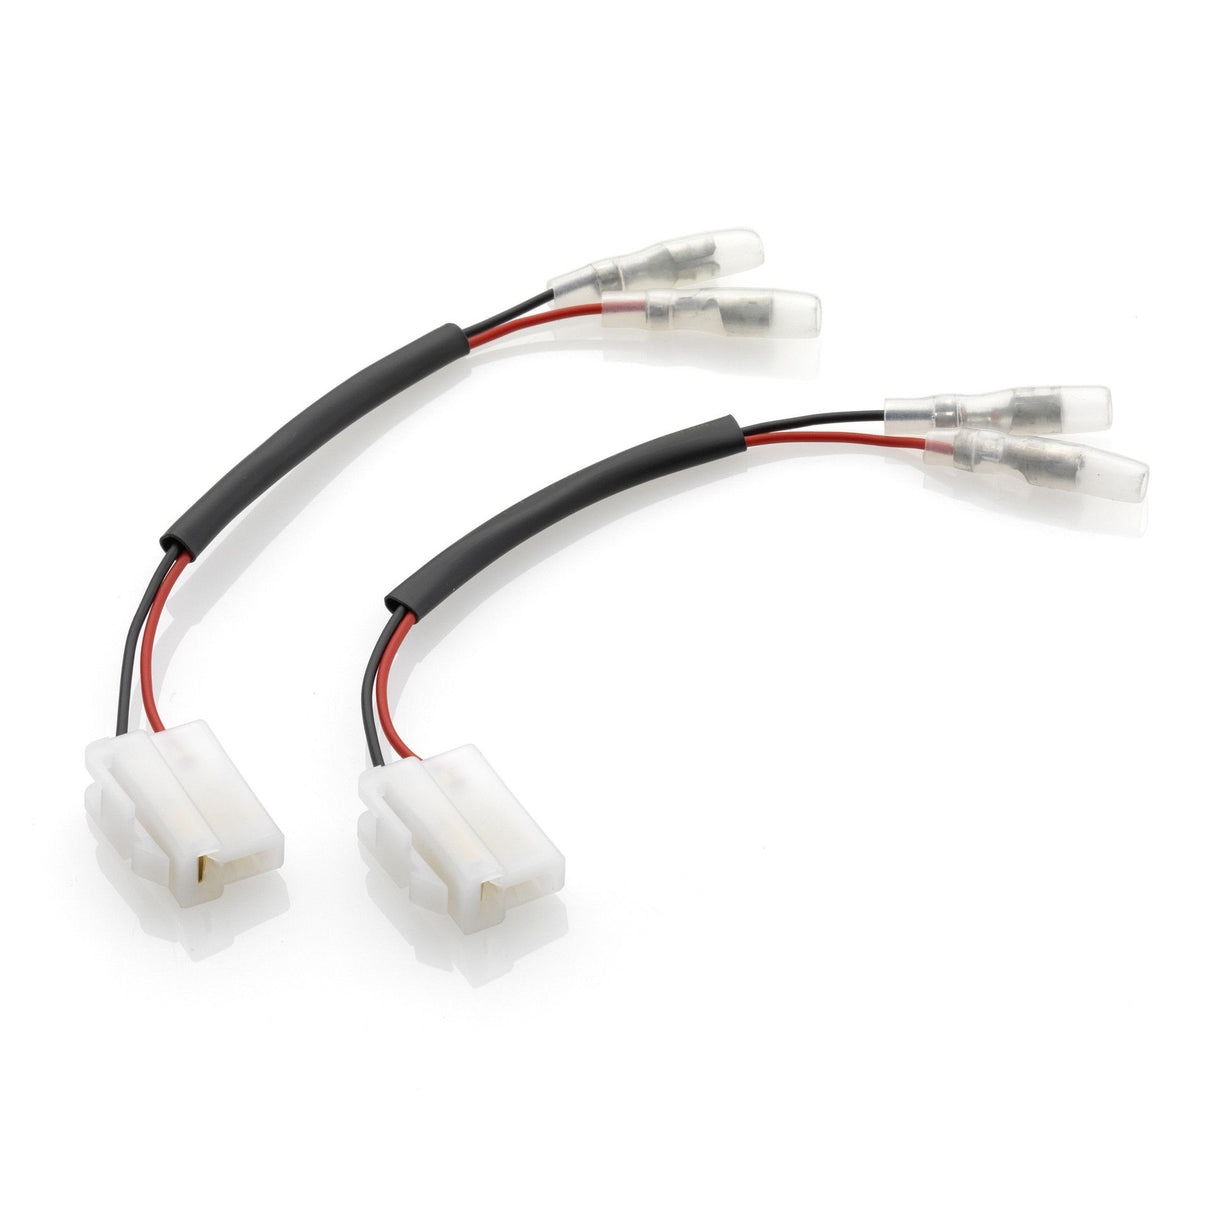 Rizoma Indicators Cable Kit EE093H